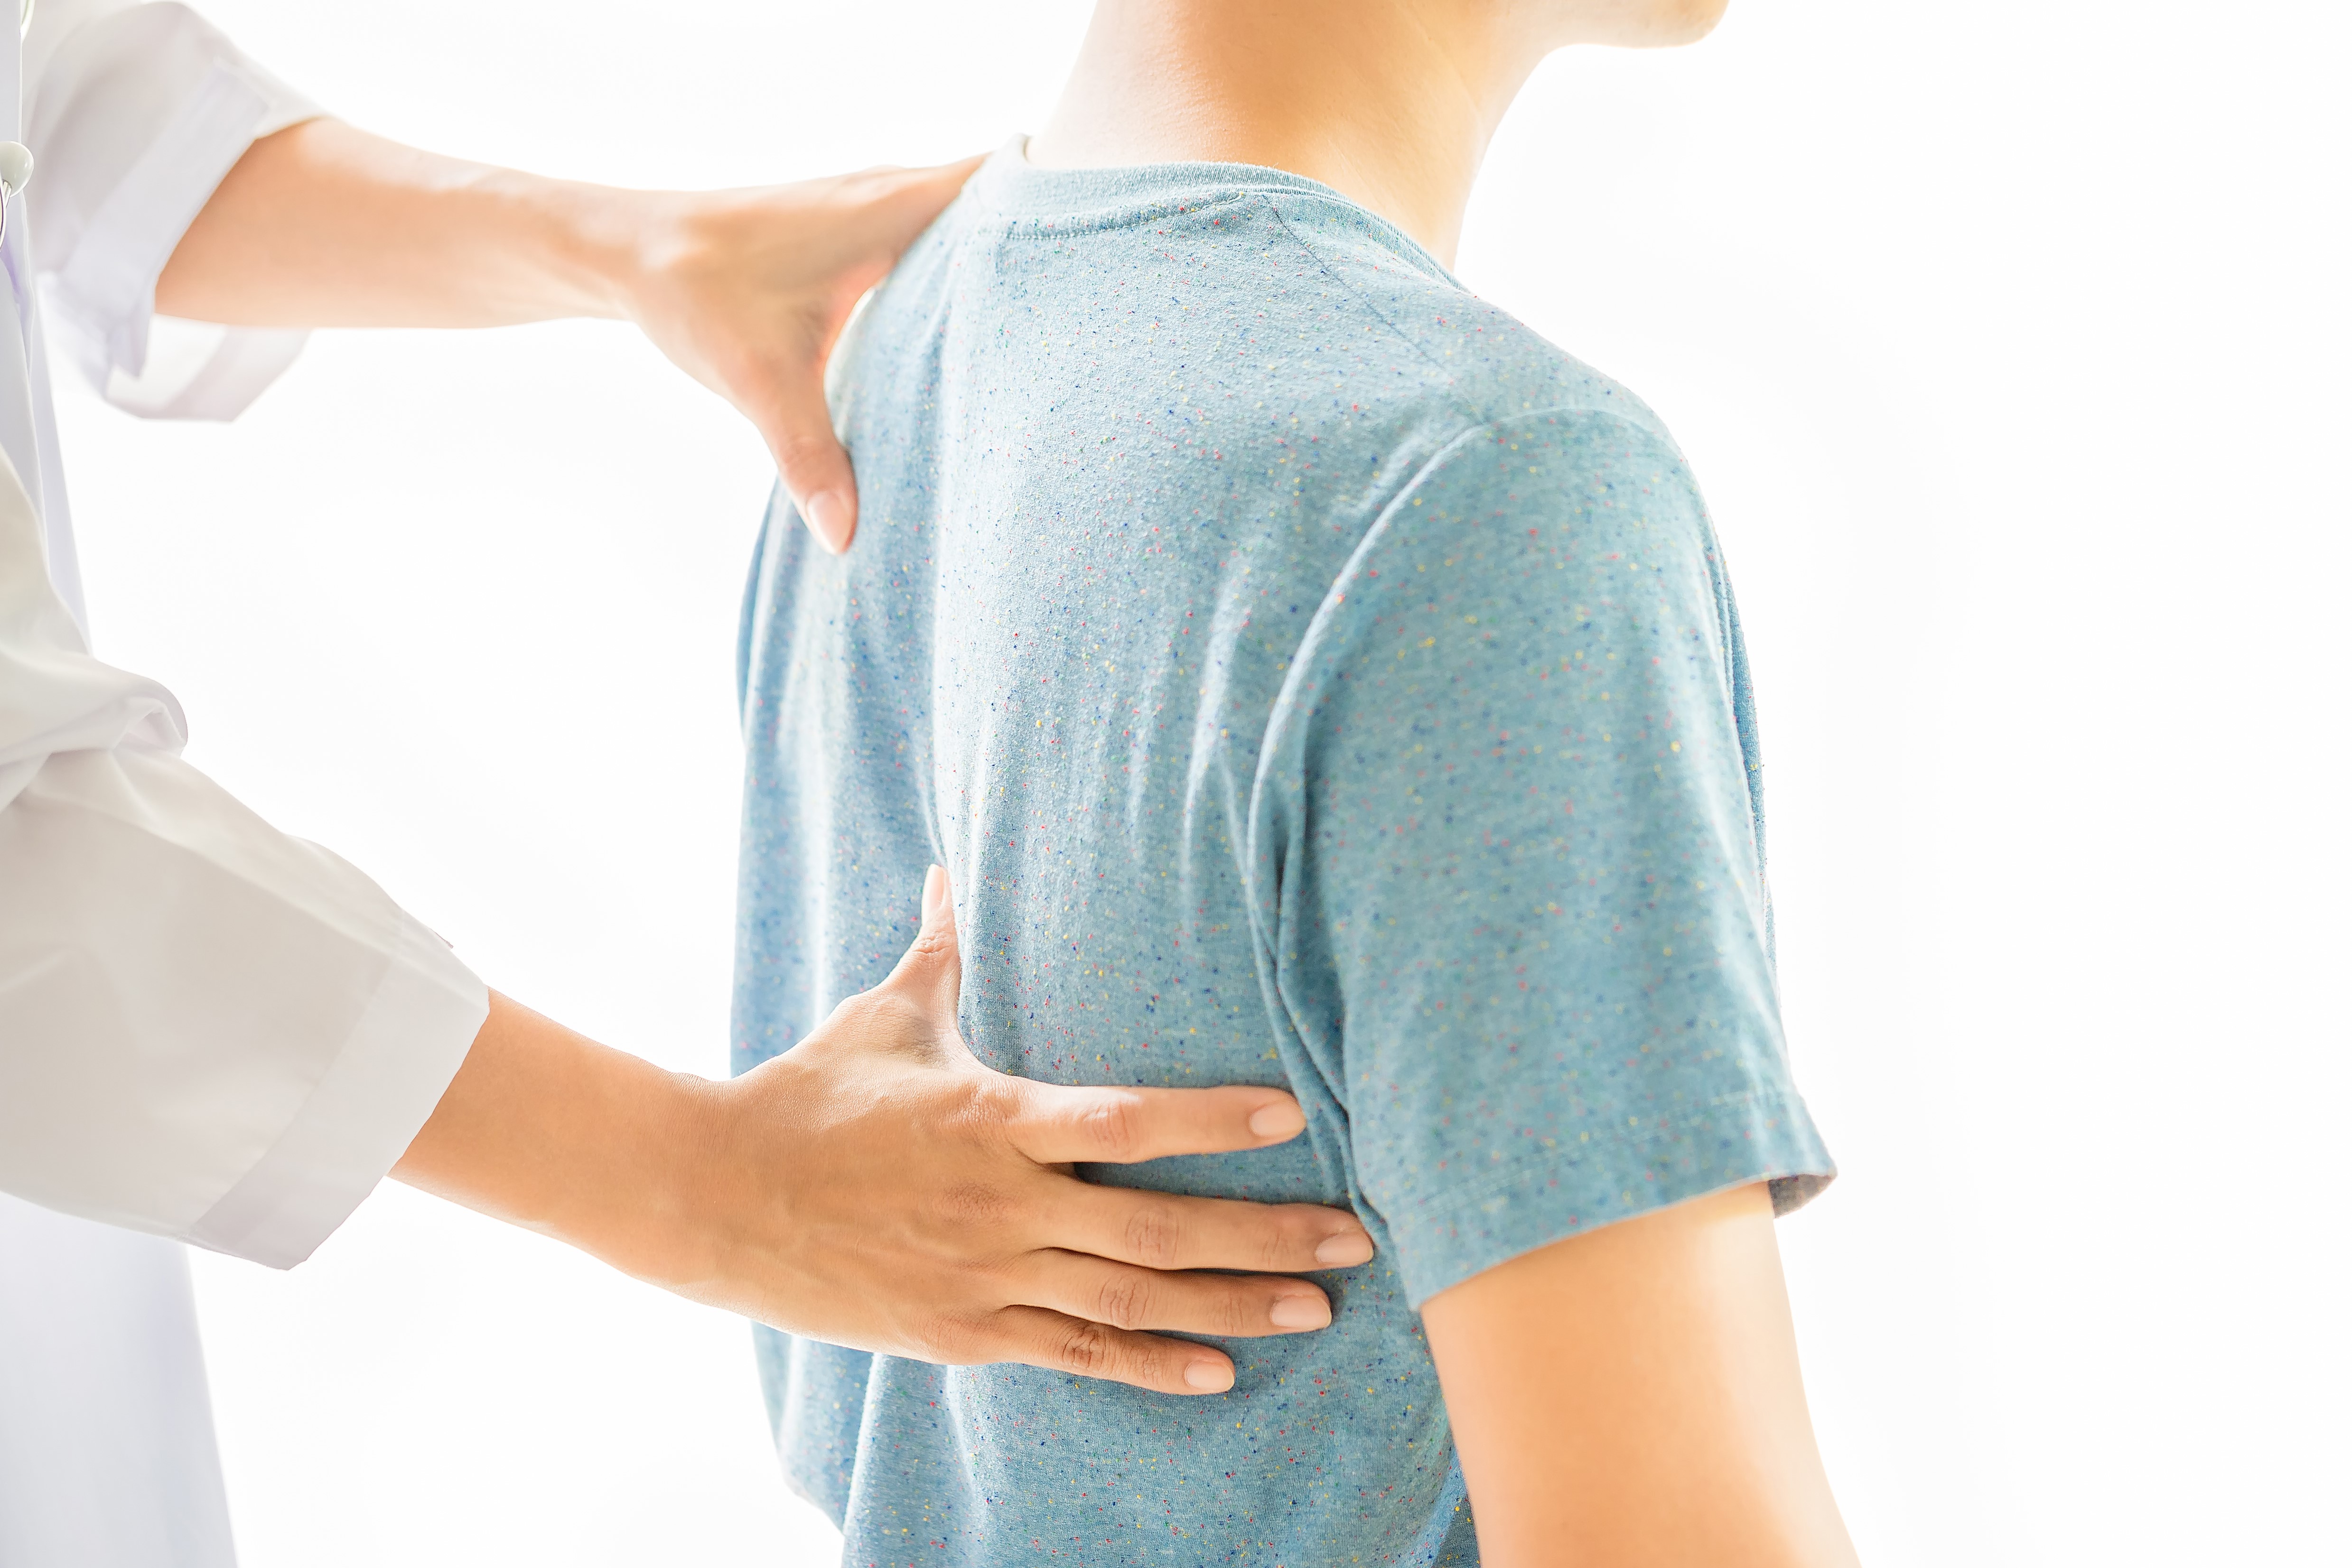 Rib Pain and Realigning Rib by Chiropractor